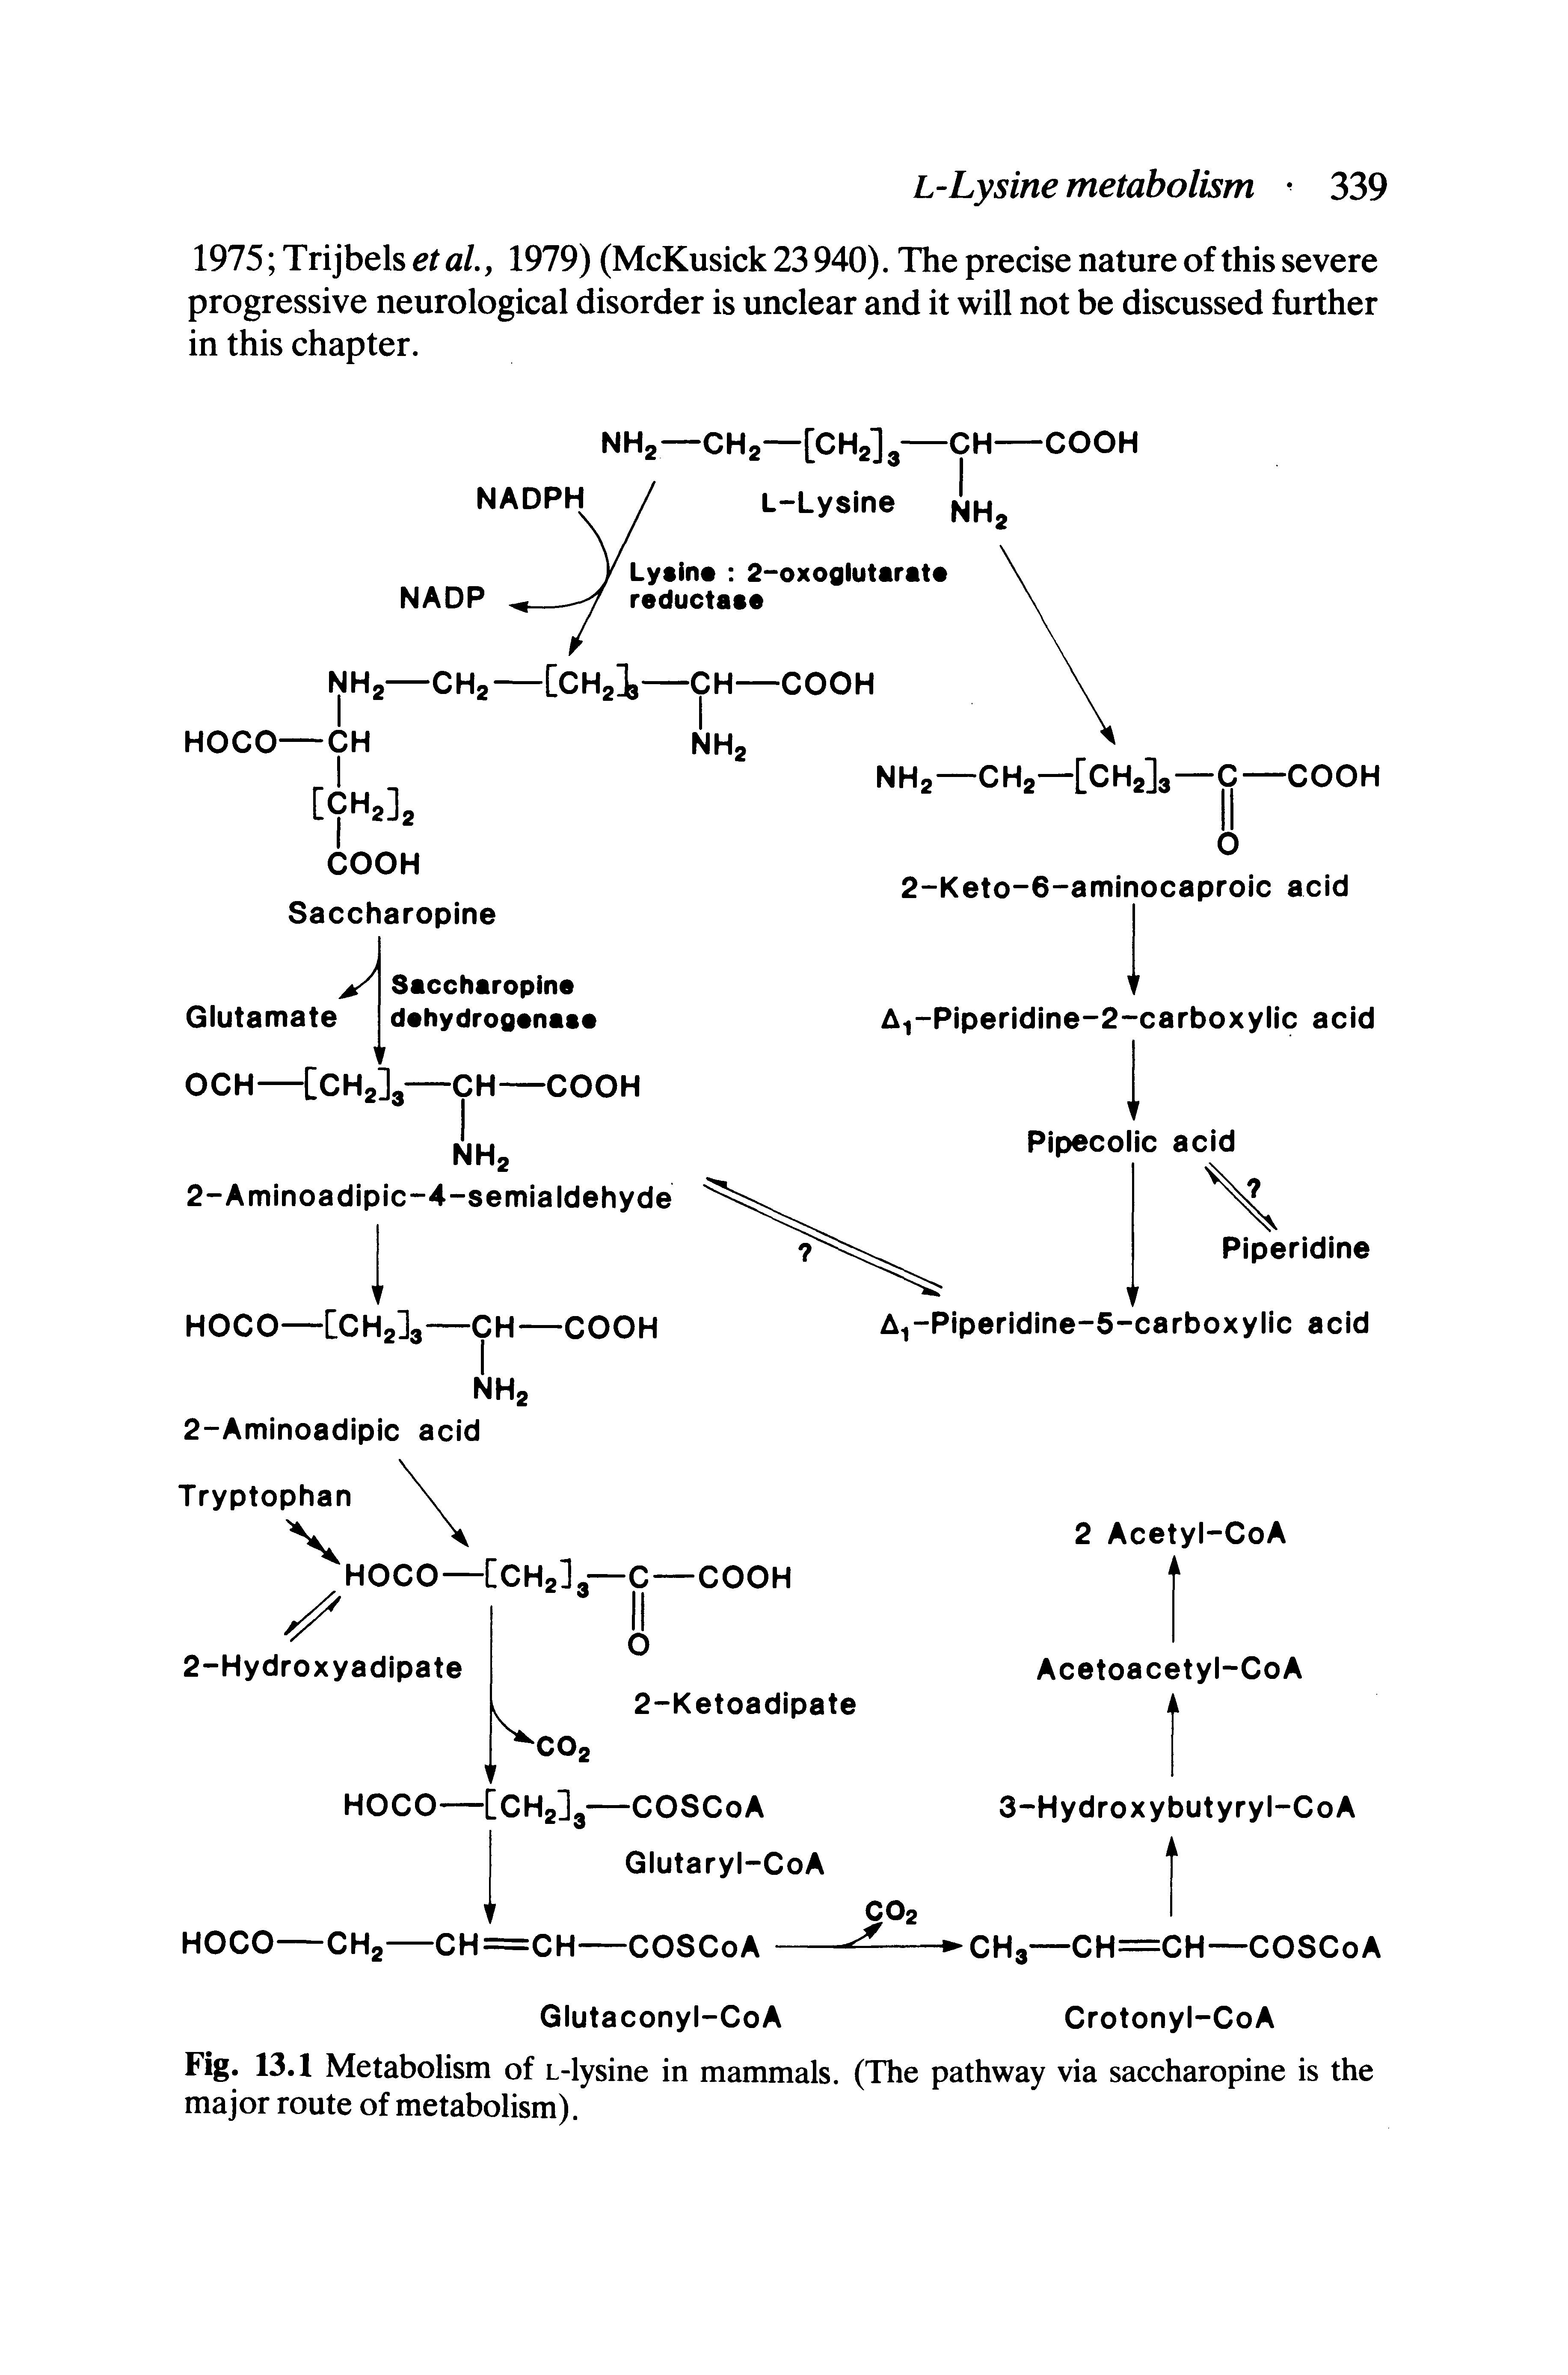 Fig. 13.1 Metabolism of L-lysine in mammals. (The pathway via saccharopine is the major route of metabolism).